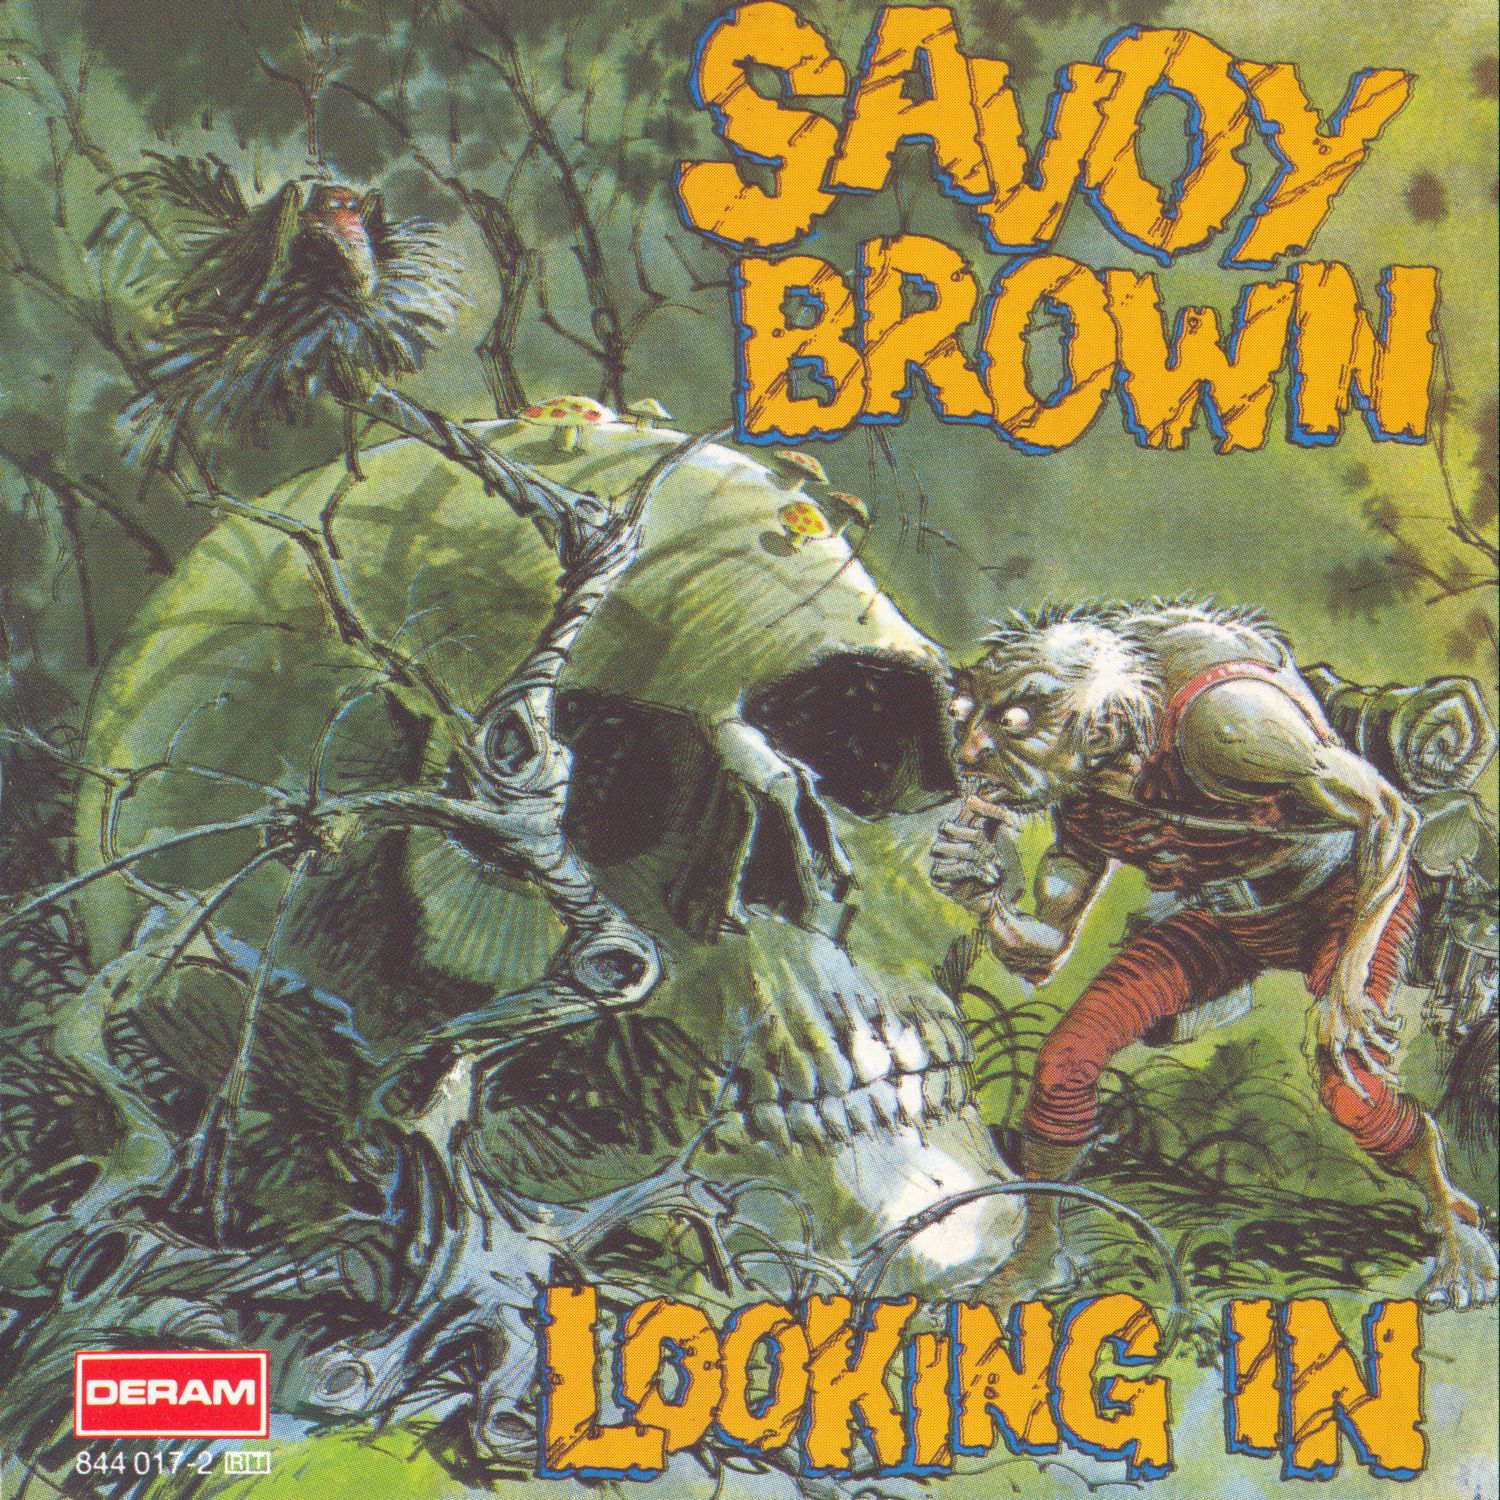 Savoy Brown & Kim Simmonds - Discography (1967-2013)